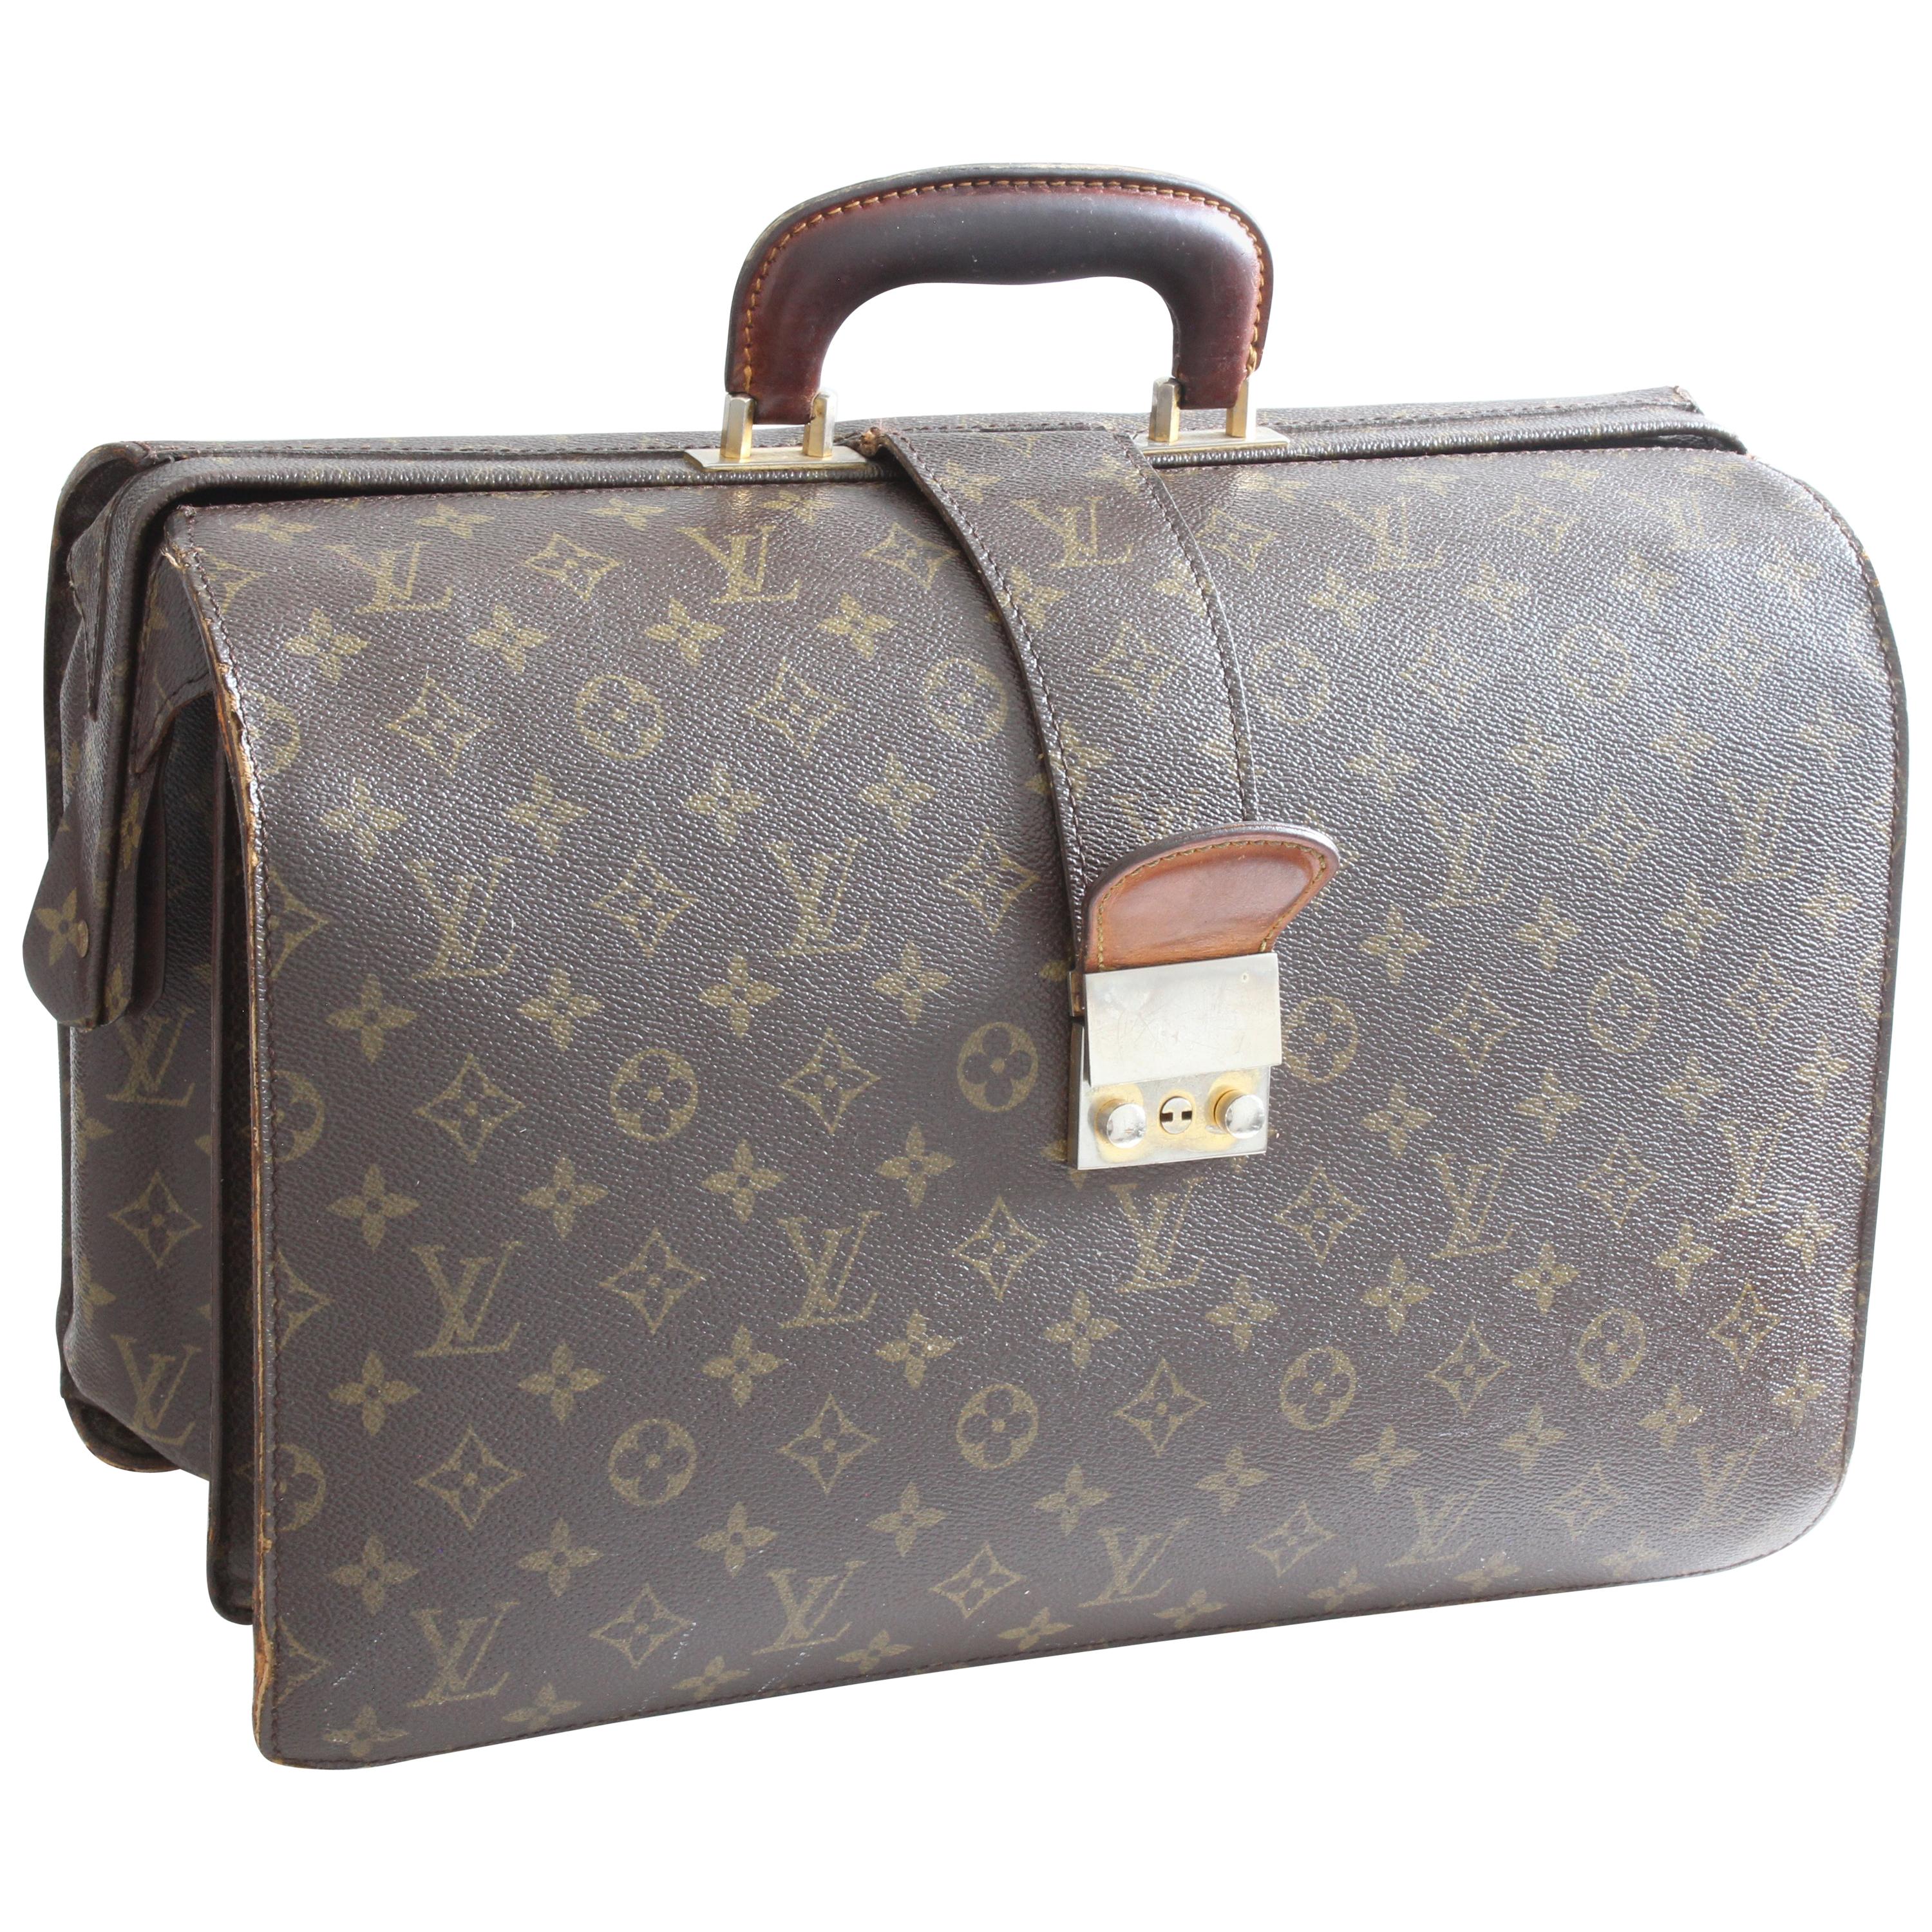 Authentic vintage Louis Vuitton Sac Chassour travel bag - clothing &  accessories - by owner - apparel sale - craigslist